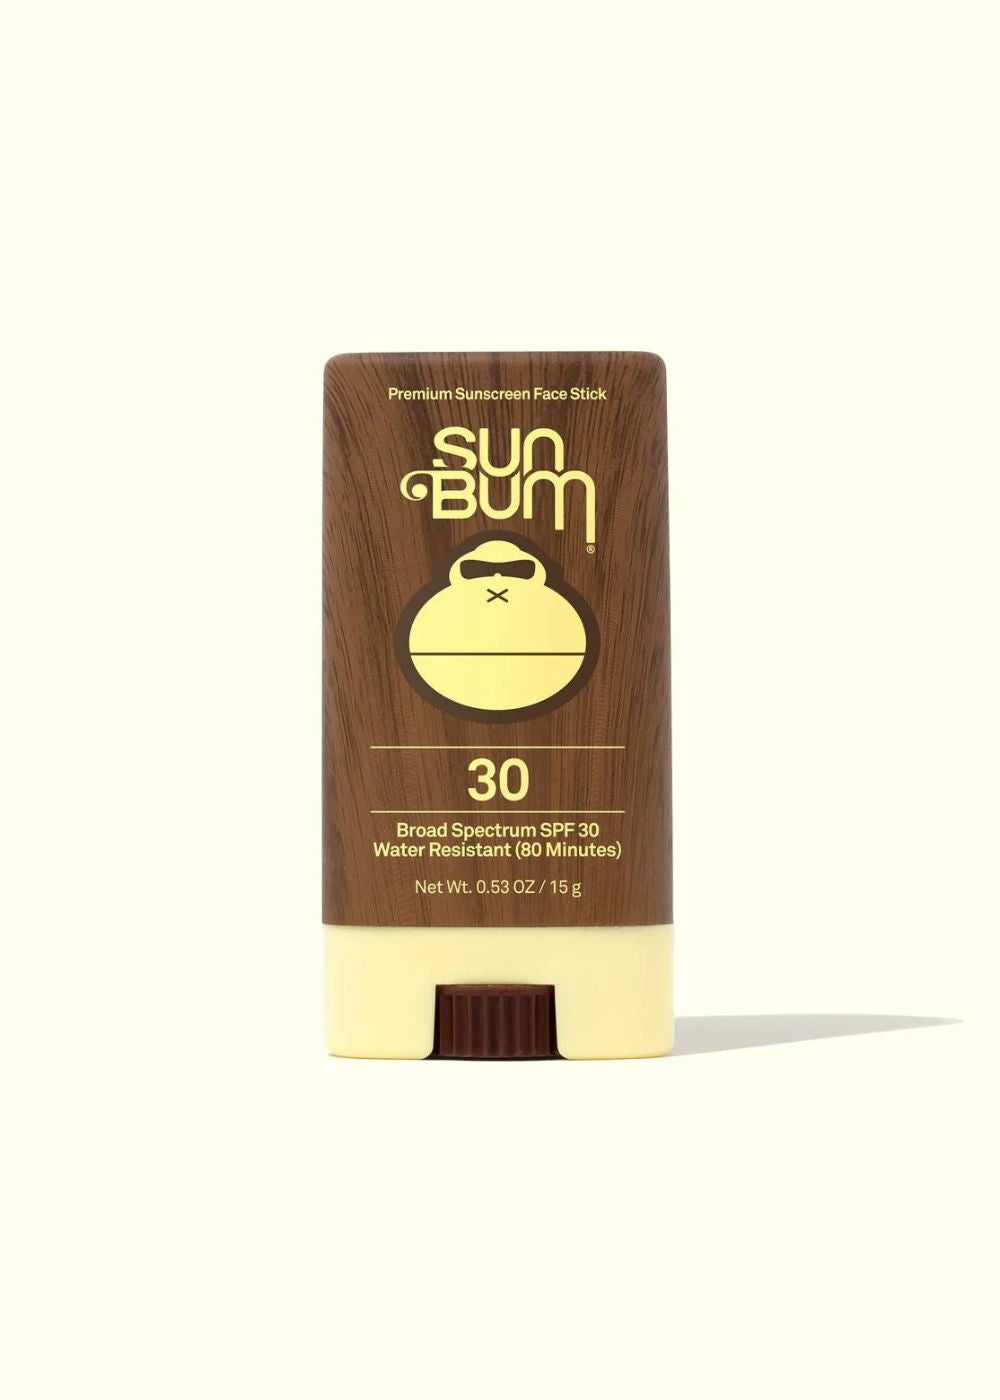 Sun Bum Original SPF 30 Sunscreen Face Stick  13 G / 0.45 OZ - קרם הגנה סטיק לפנים  30spf